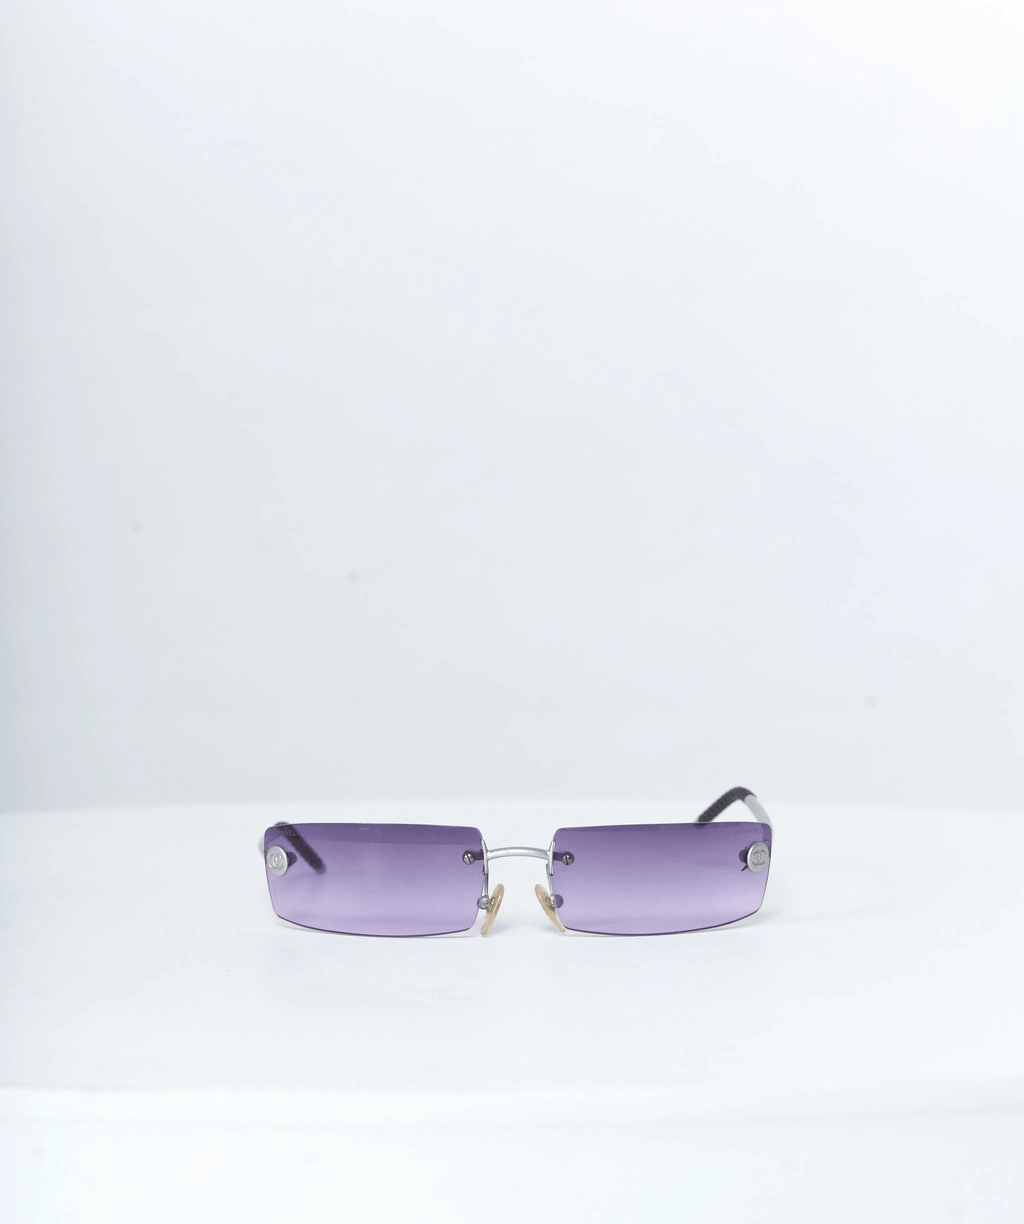 Chanel Rimless Purple Sunglasses